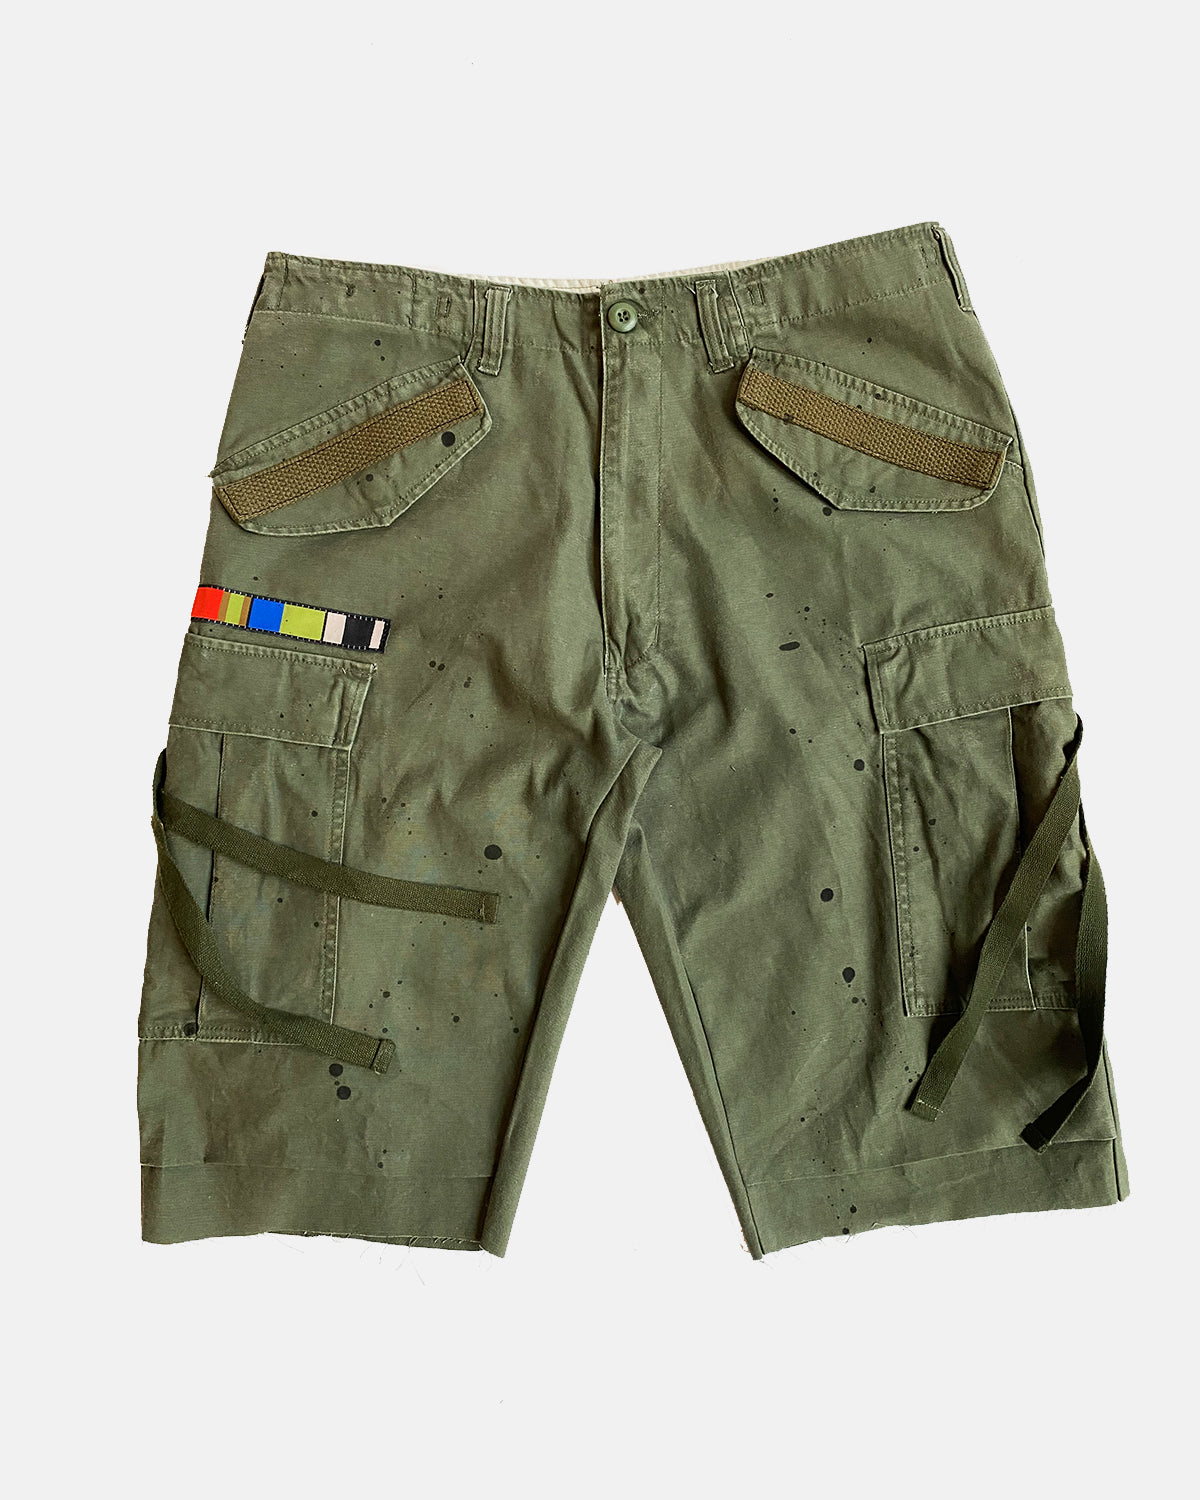 olive painted M-65 cargo shorts